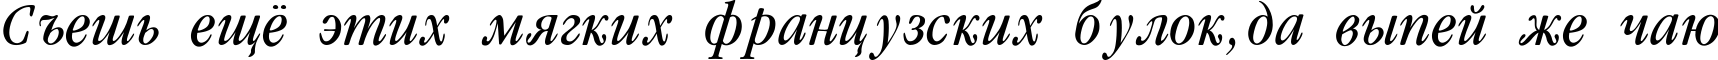 Пример написания шрифтом Garamondcond-Light-Italic текста на русском